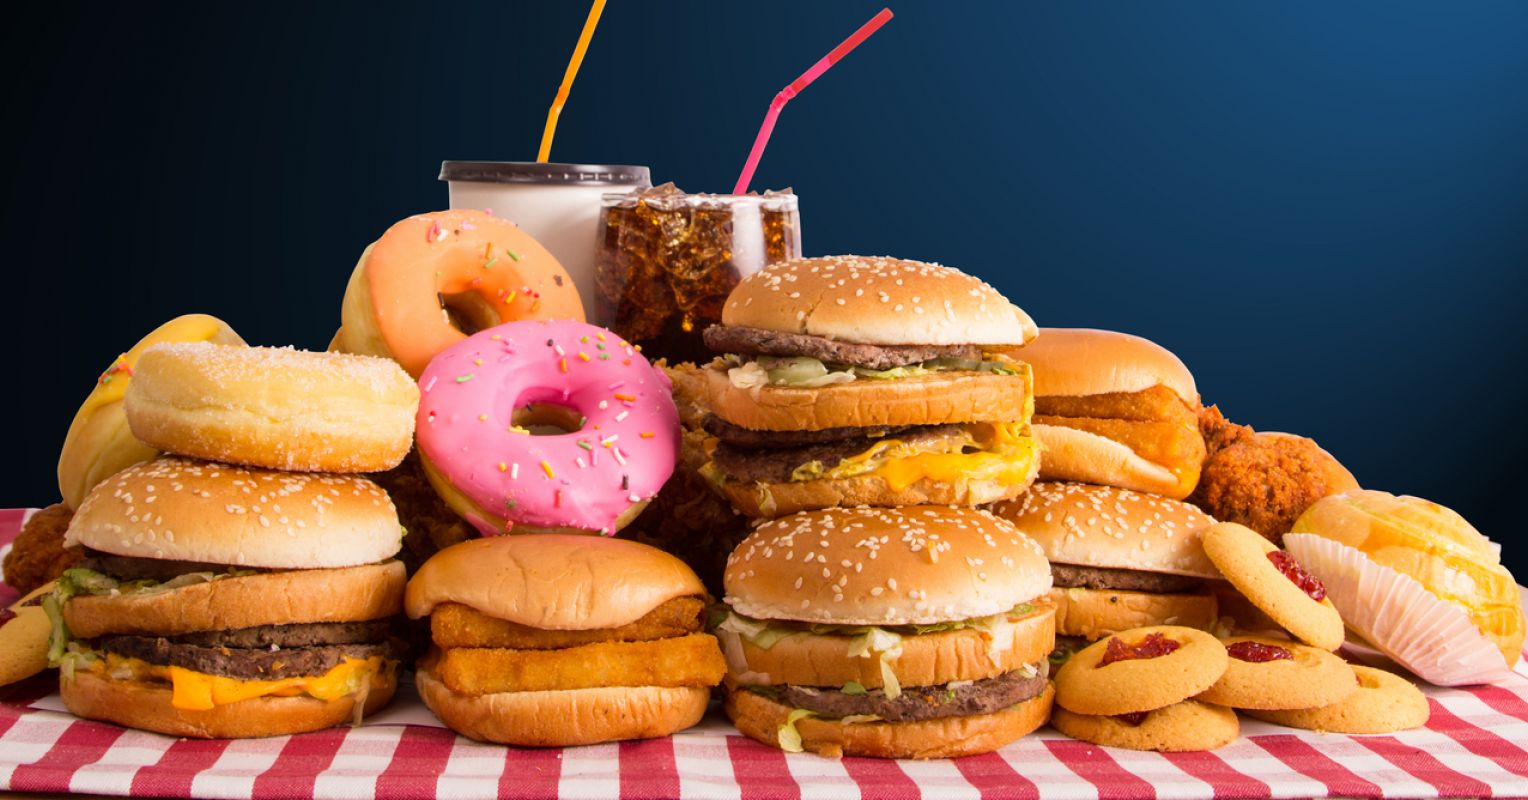 healthy food and junk food essay